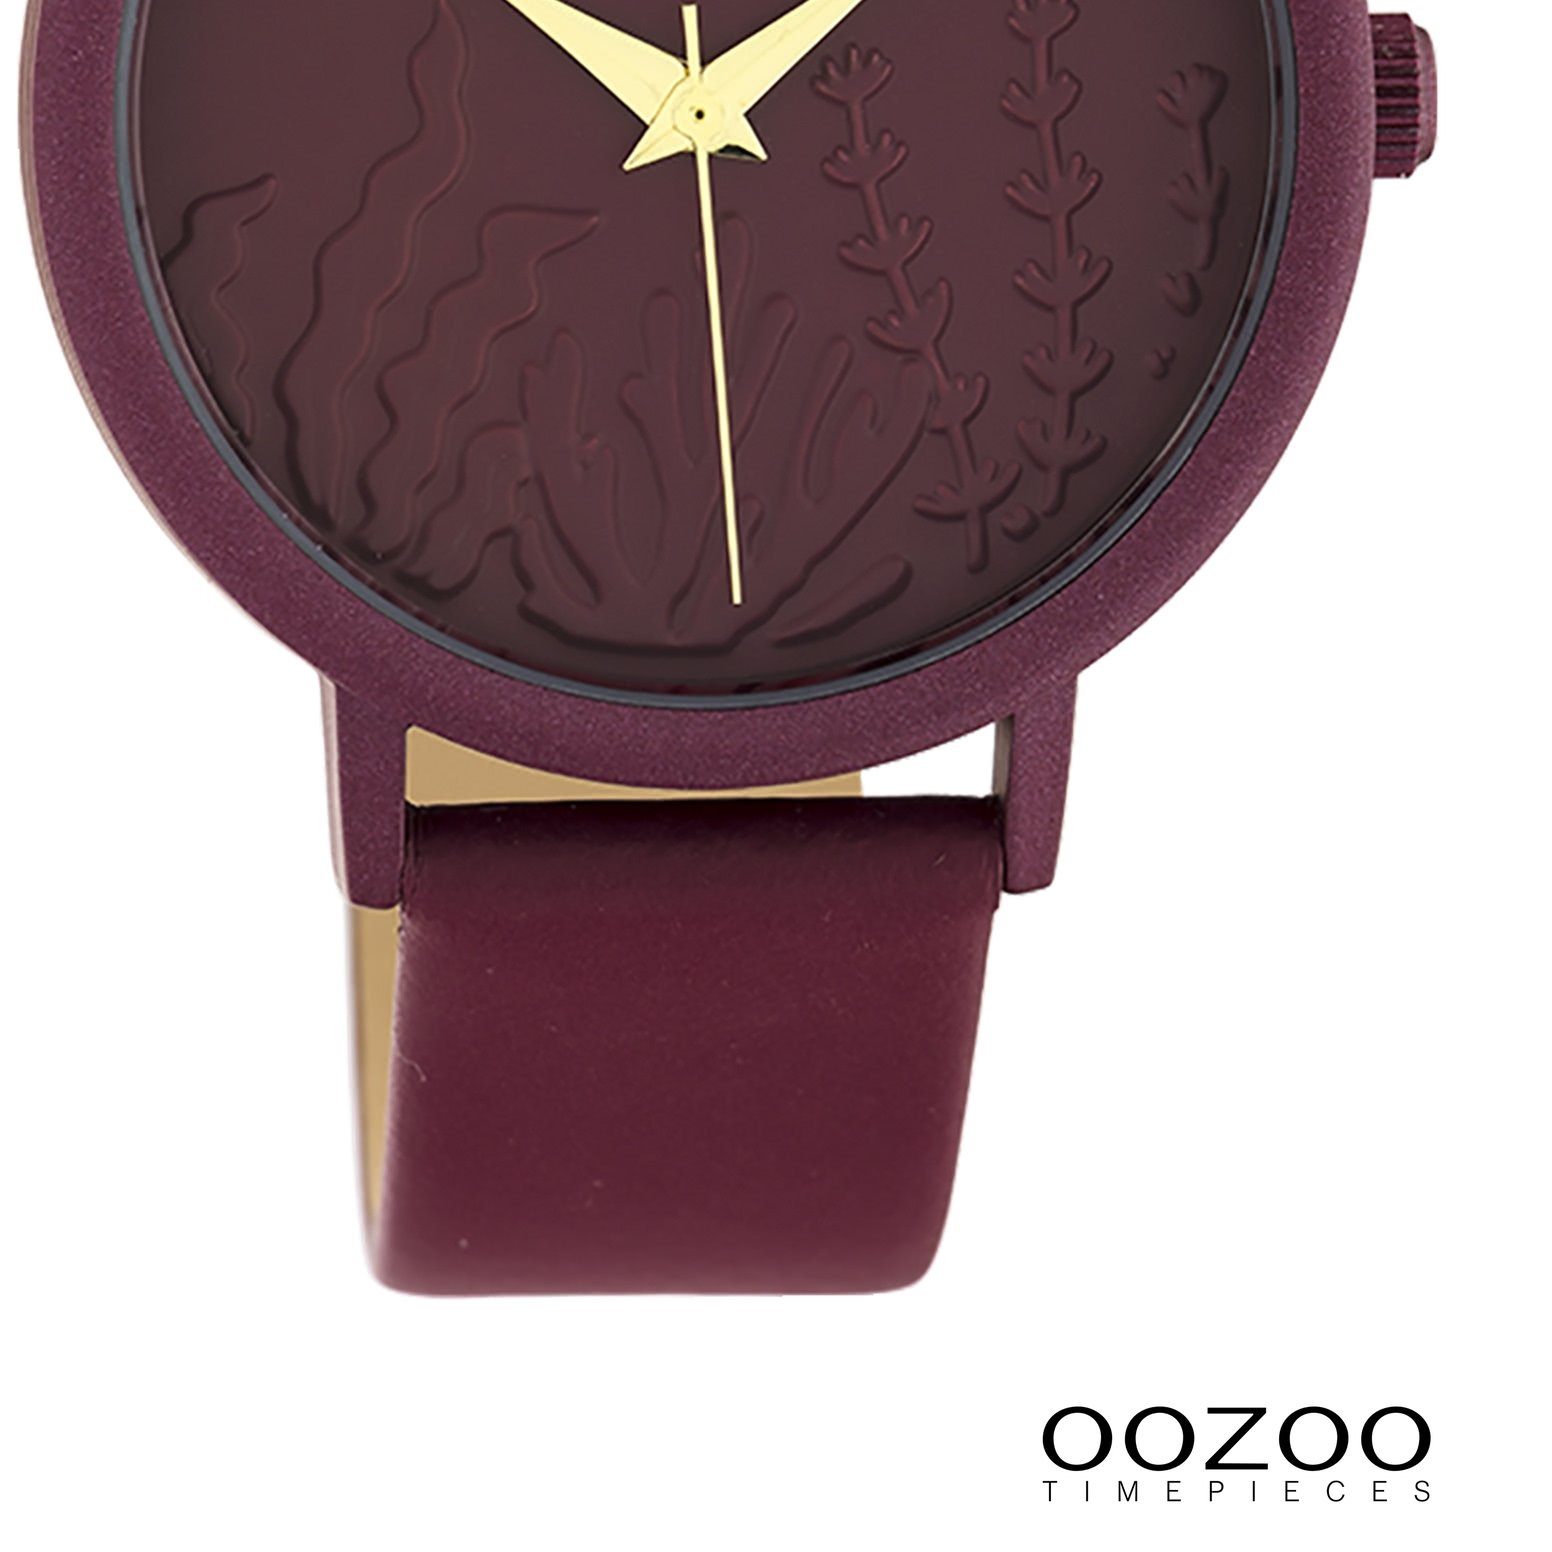 Timepieces Oozoo OOZOO Quarzuhr Lederarmband, Damen Armbanduhr rund, Damenuhr 35mm) (ca. Analog, Fashion-Style mittel